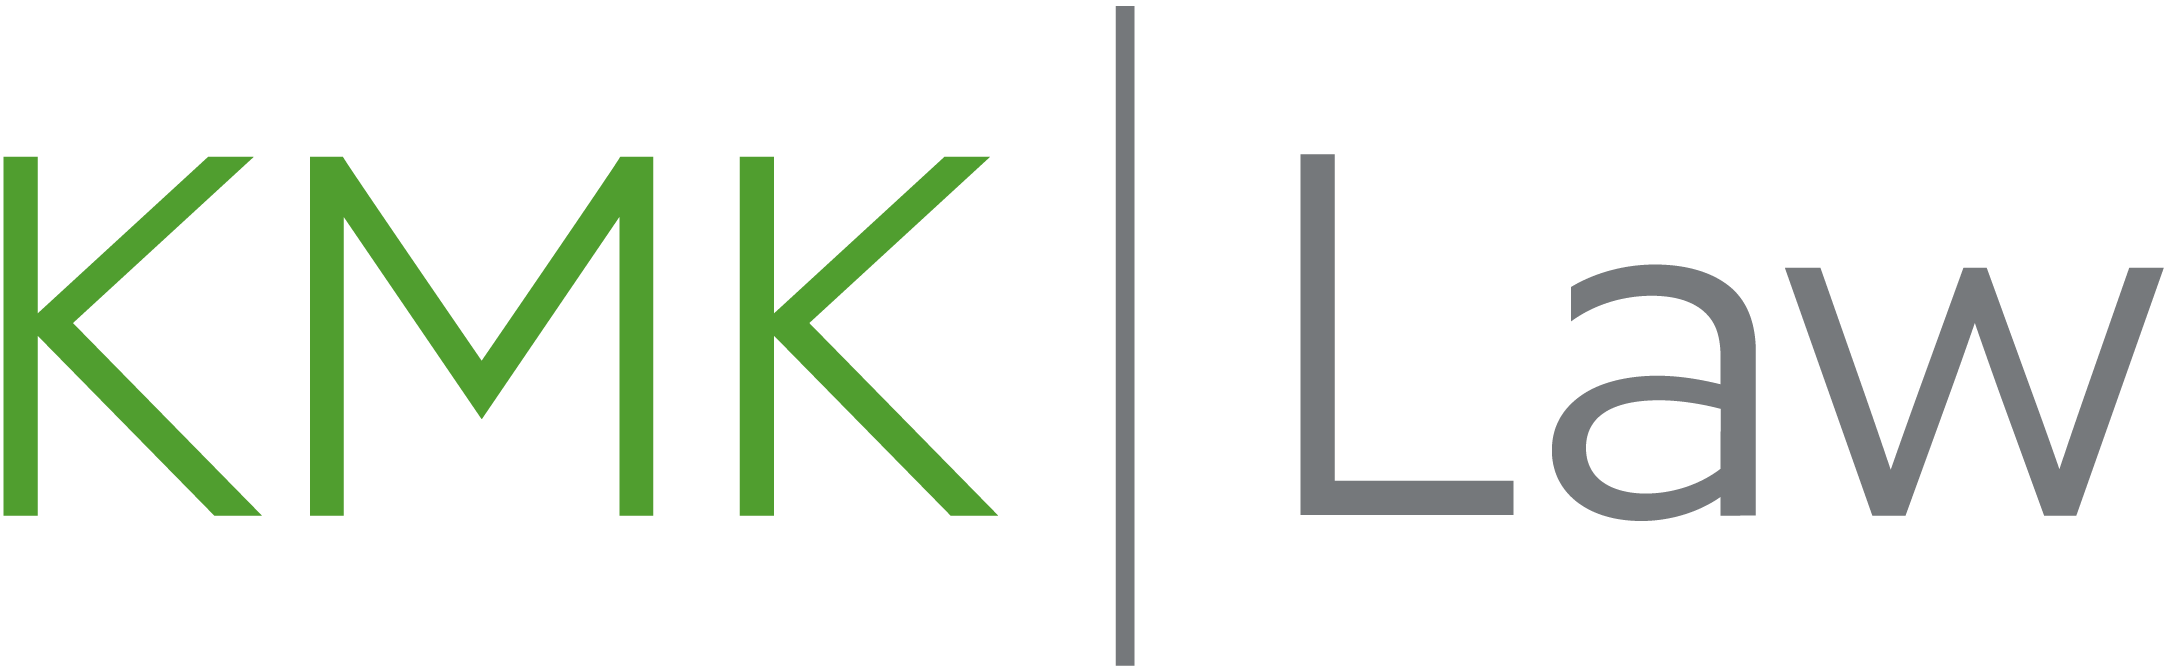 KMK Law Logo Full Color Digital Use